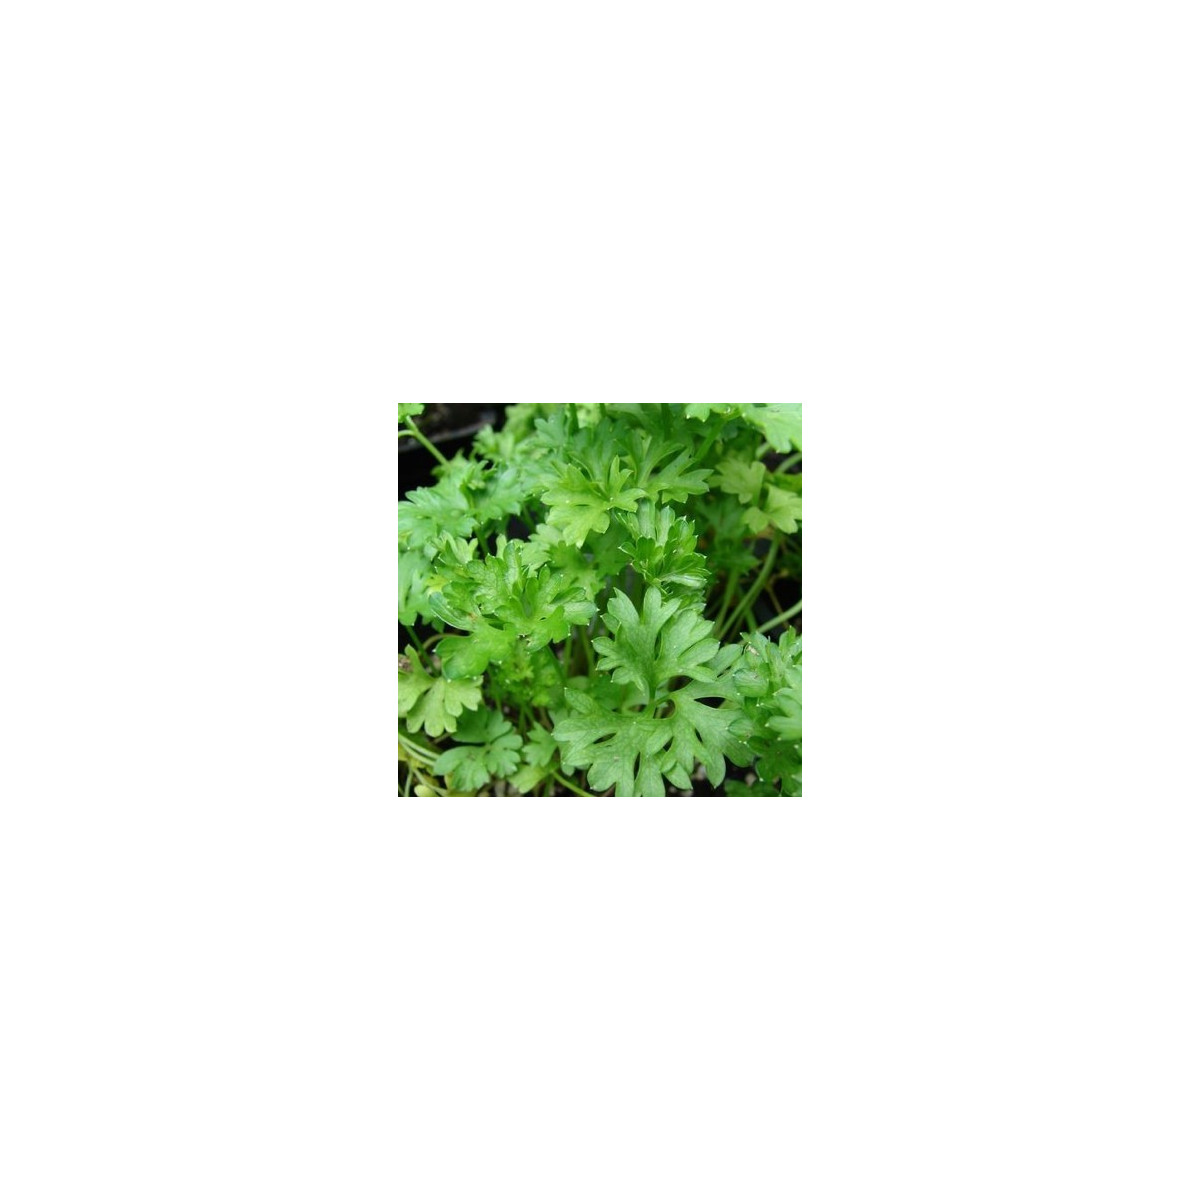 Petržel naťová kadeřavá - Petroselinum crispum convar - semena - 1 g